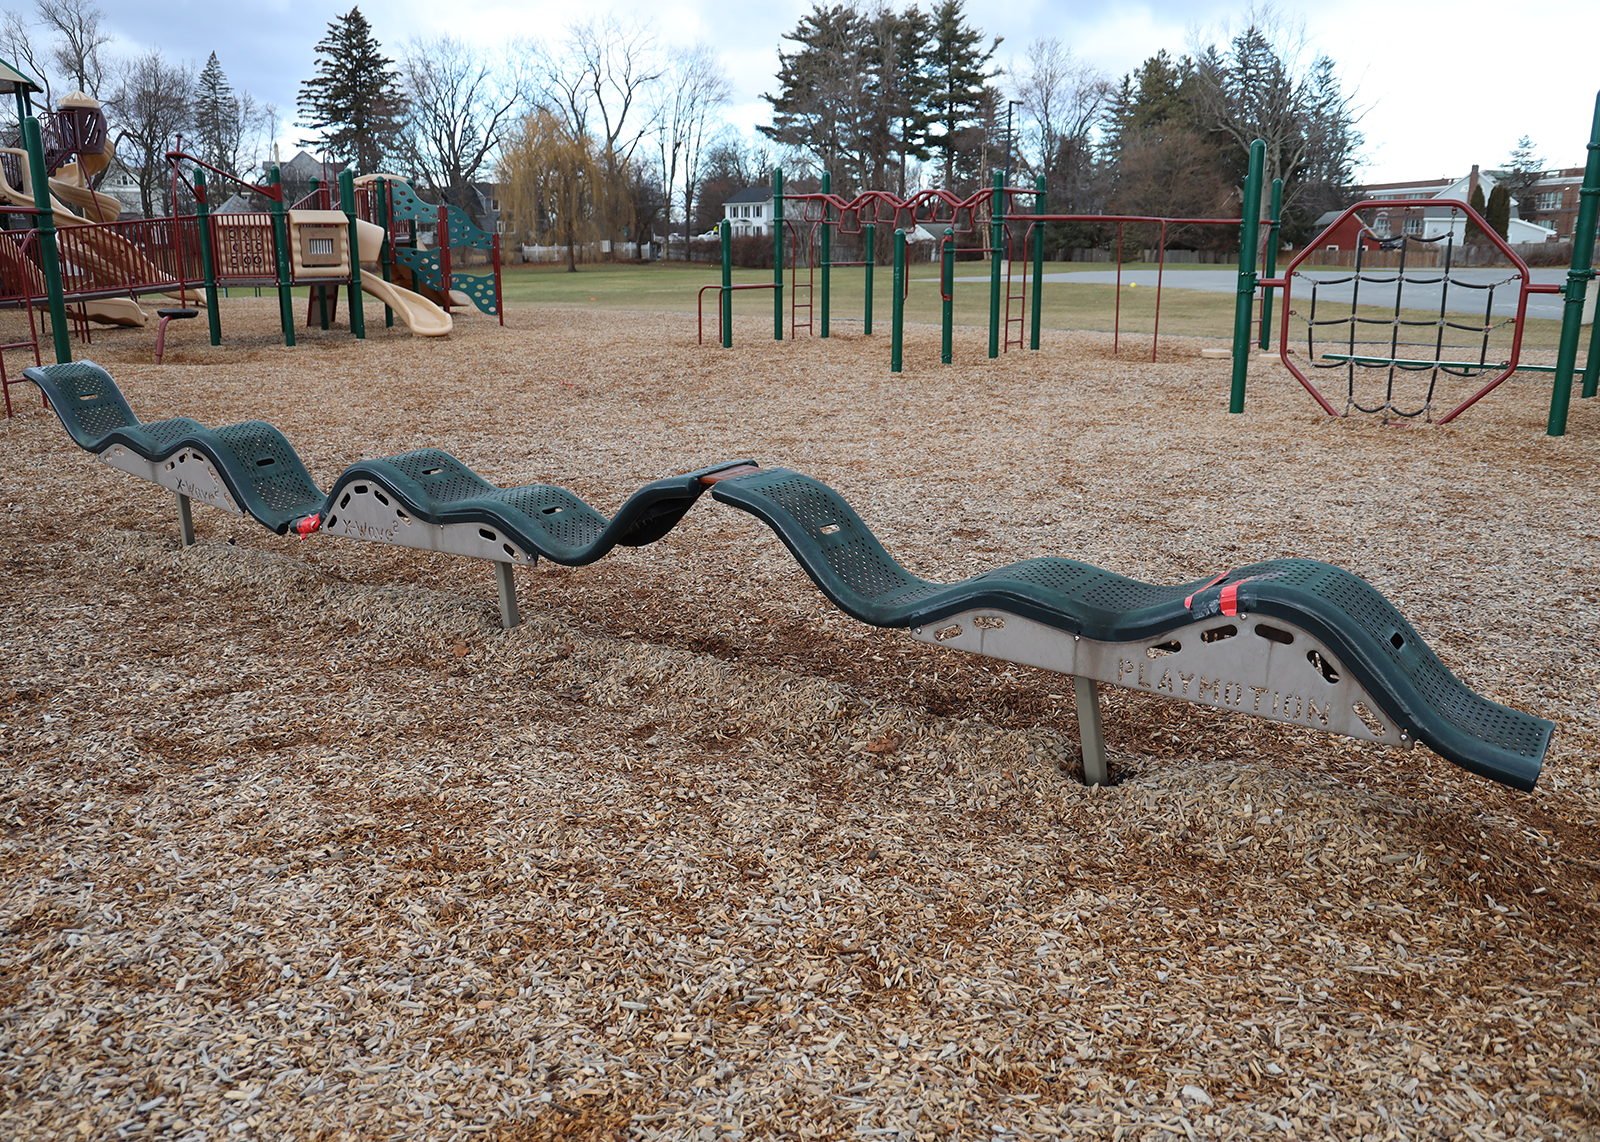 deteriorating elementary school playground equiptment